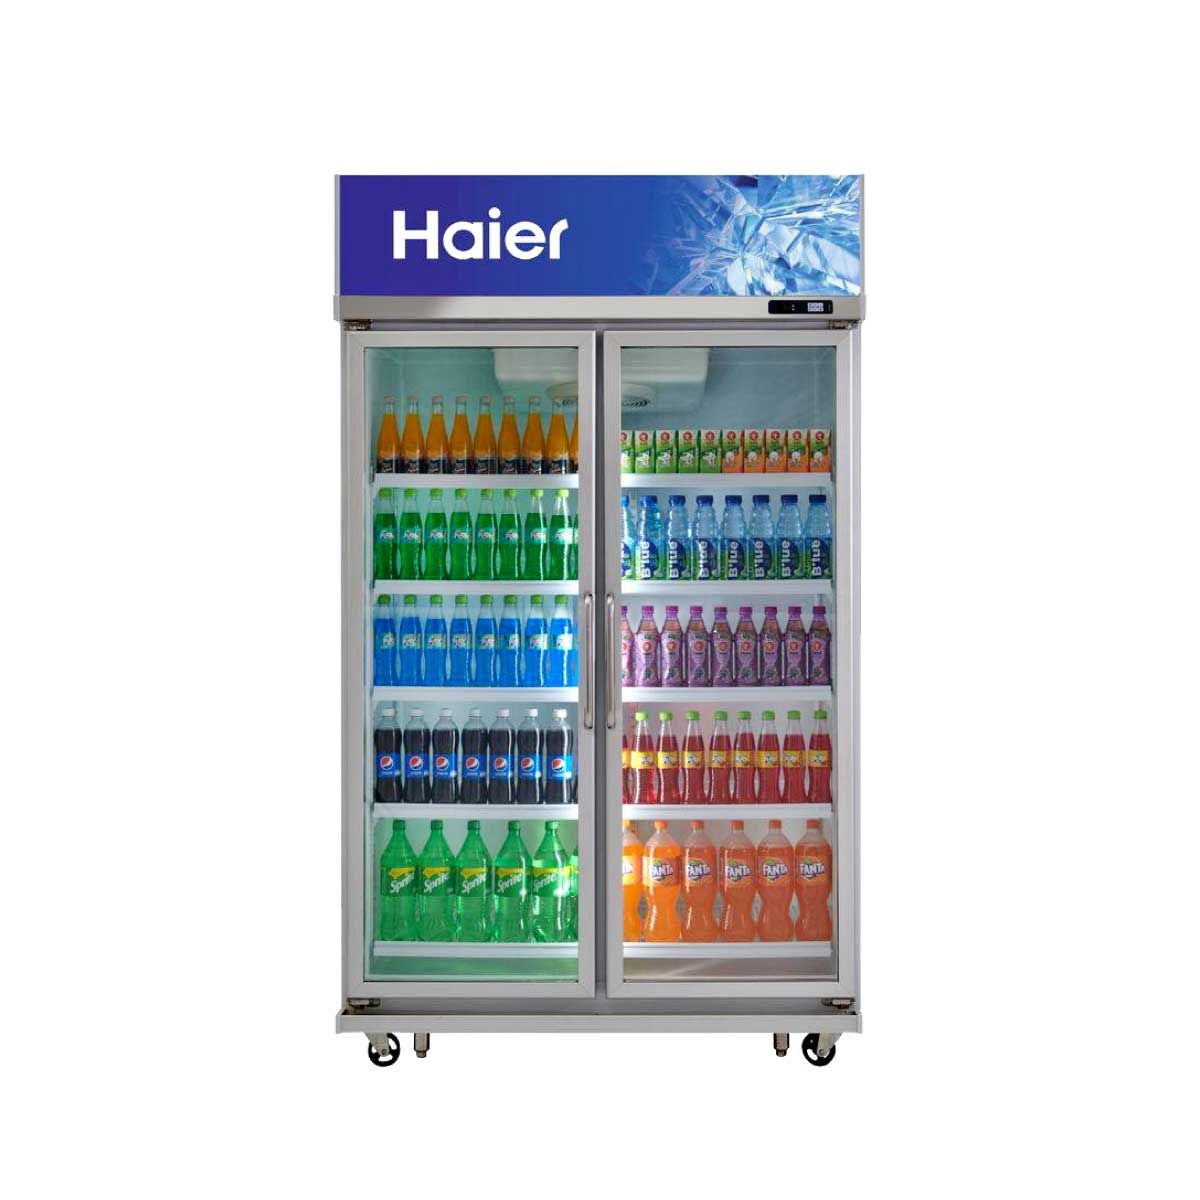 HAIER ตู้แช่เย็น 2 ประตู รุ่น SC-1700PCS2LEDV4 ความจุ 36.0 คิว  1,019 ลิตร